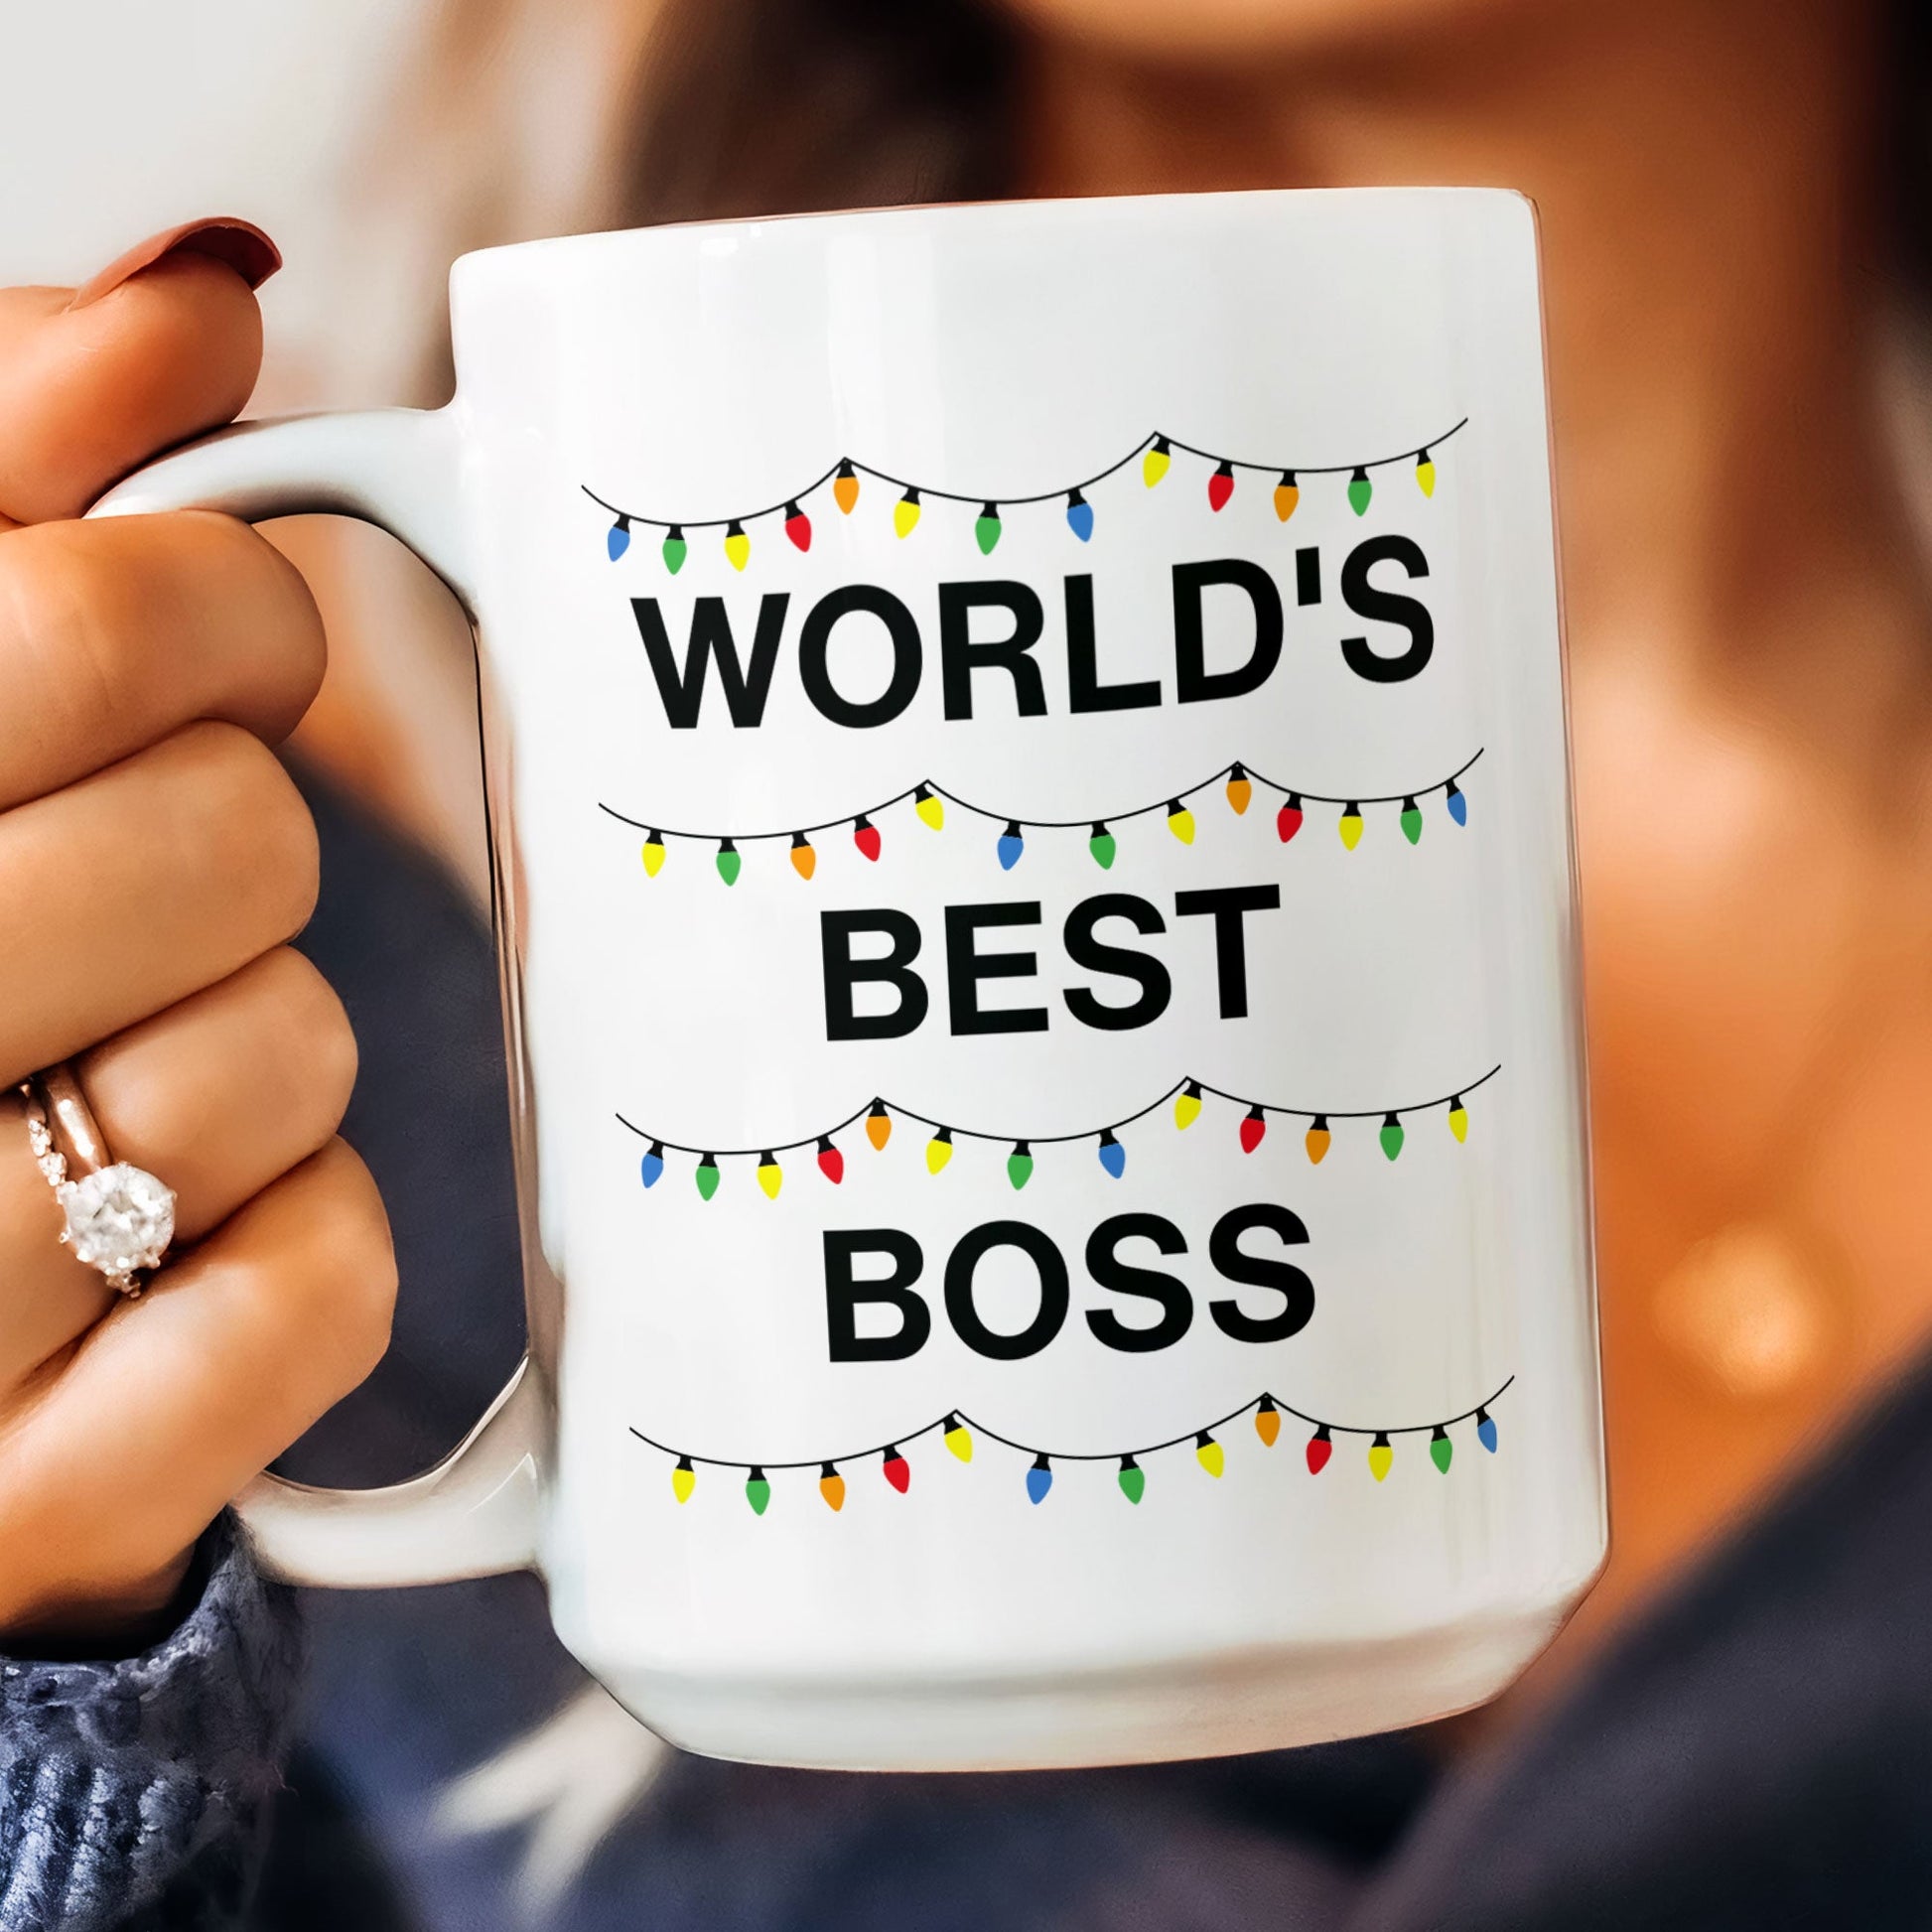 Boss - World's Best Boss Mug (2 Options) (11 oz.)